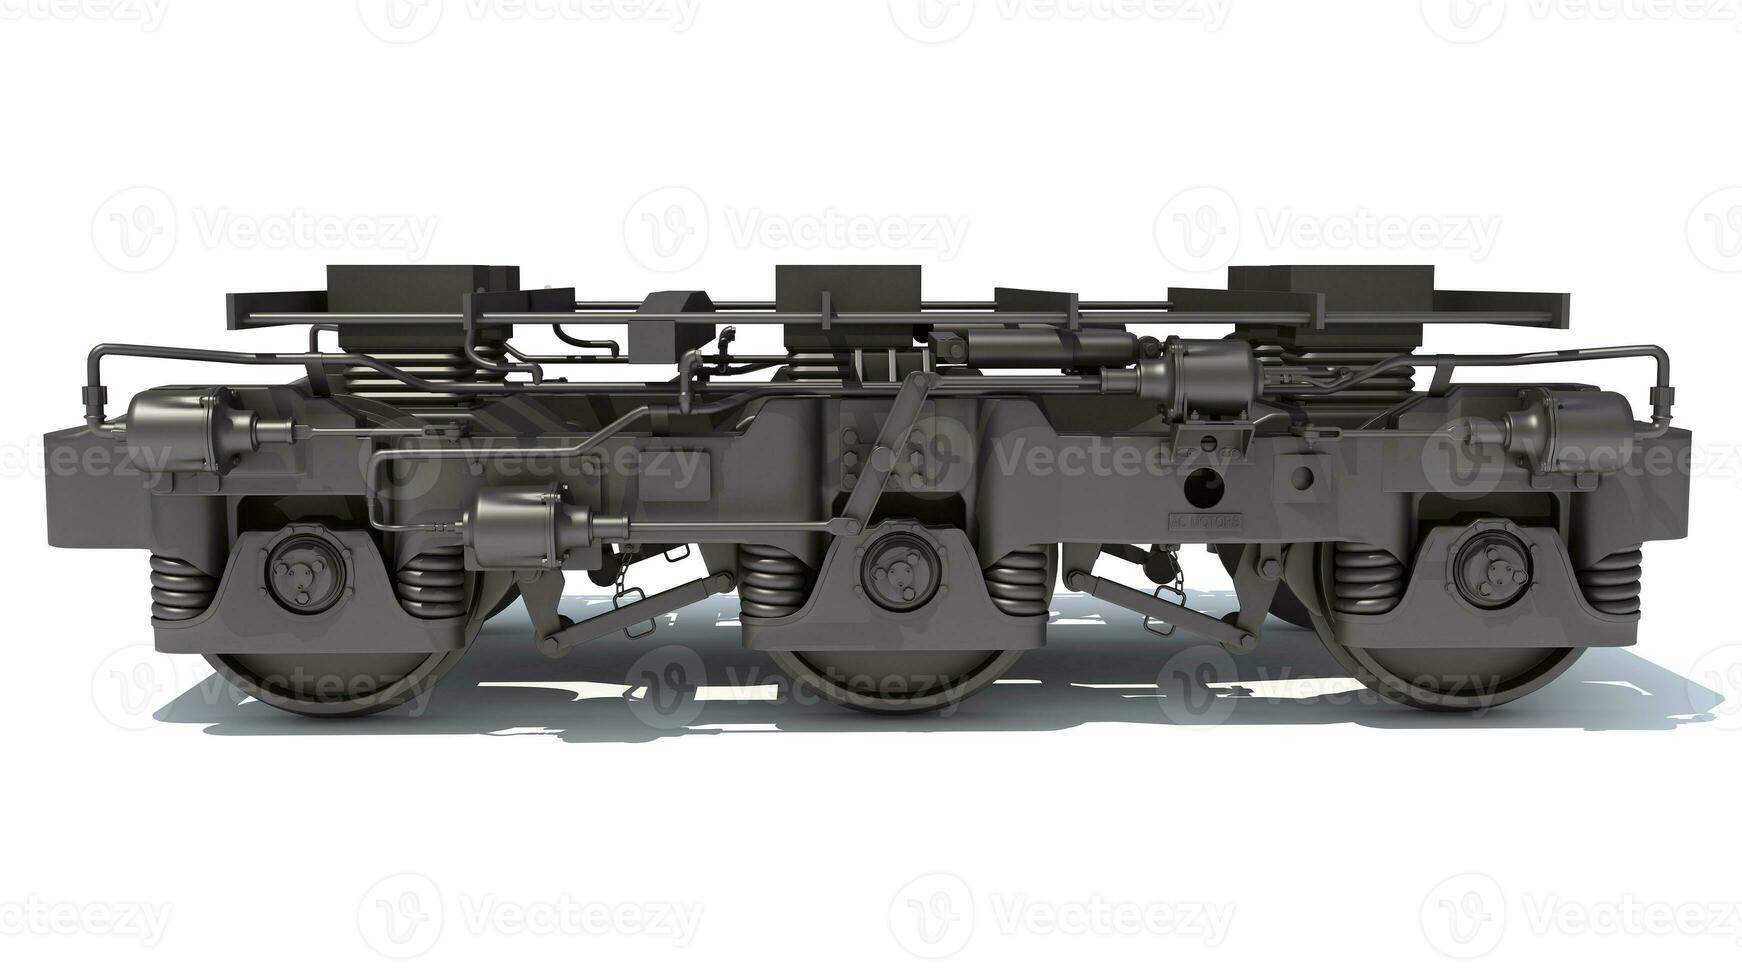 Train Locomotive Trucks Wheels 3D rendering on white background photo